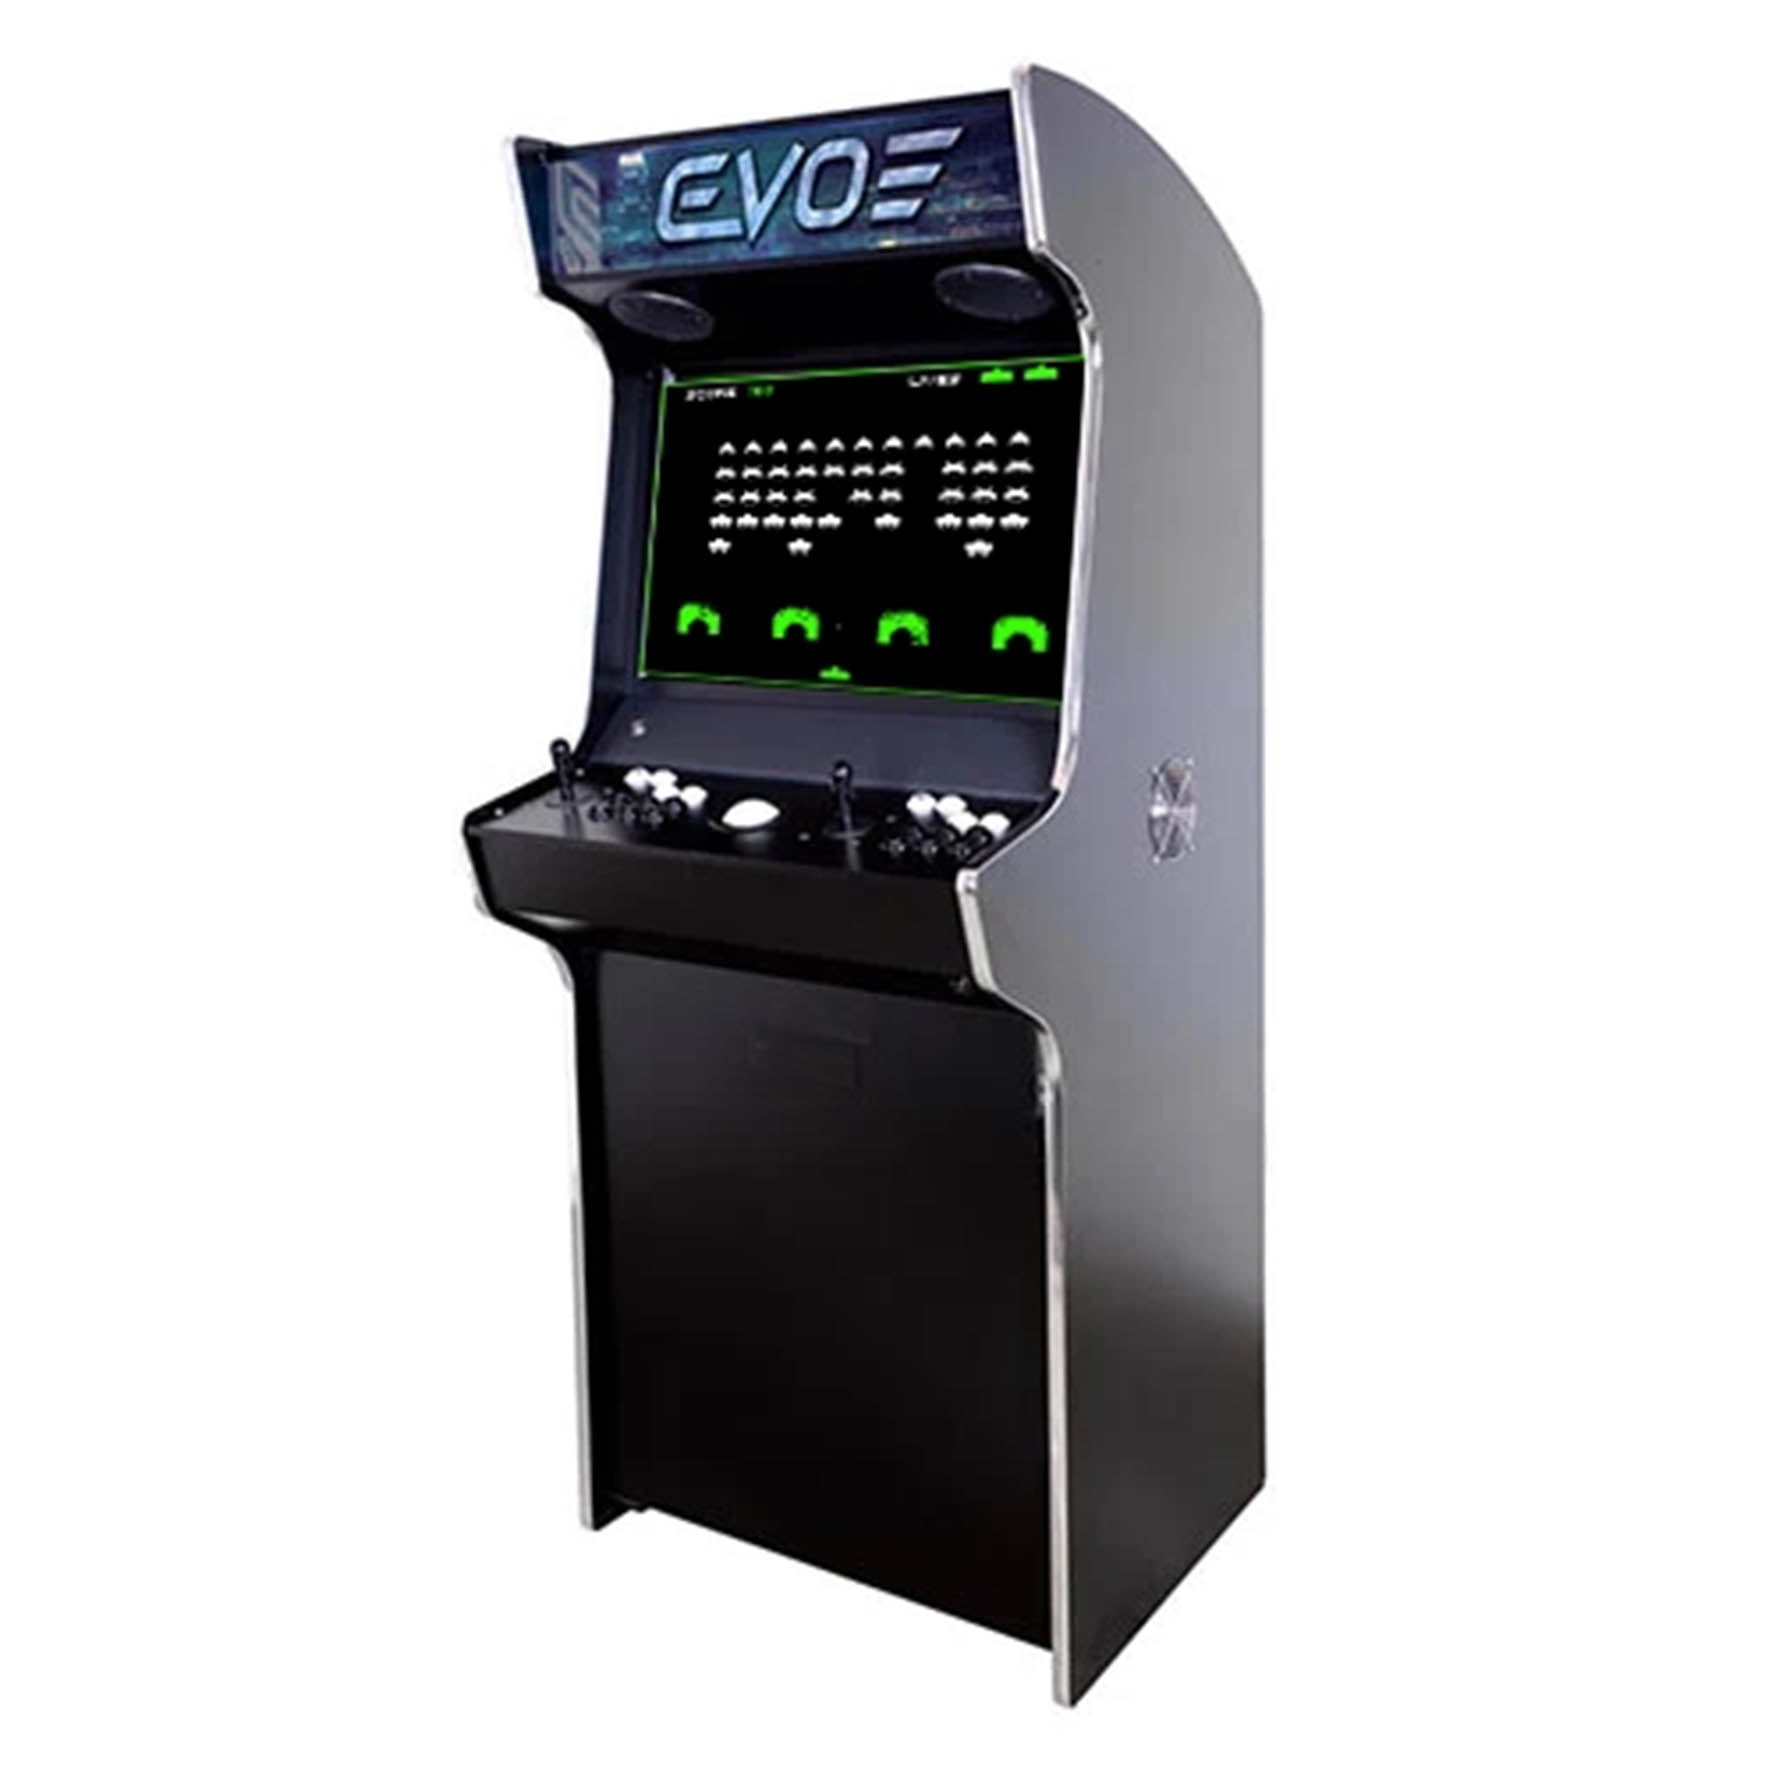 Evo 2 Player Upright Arcade MultiGame